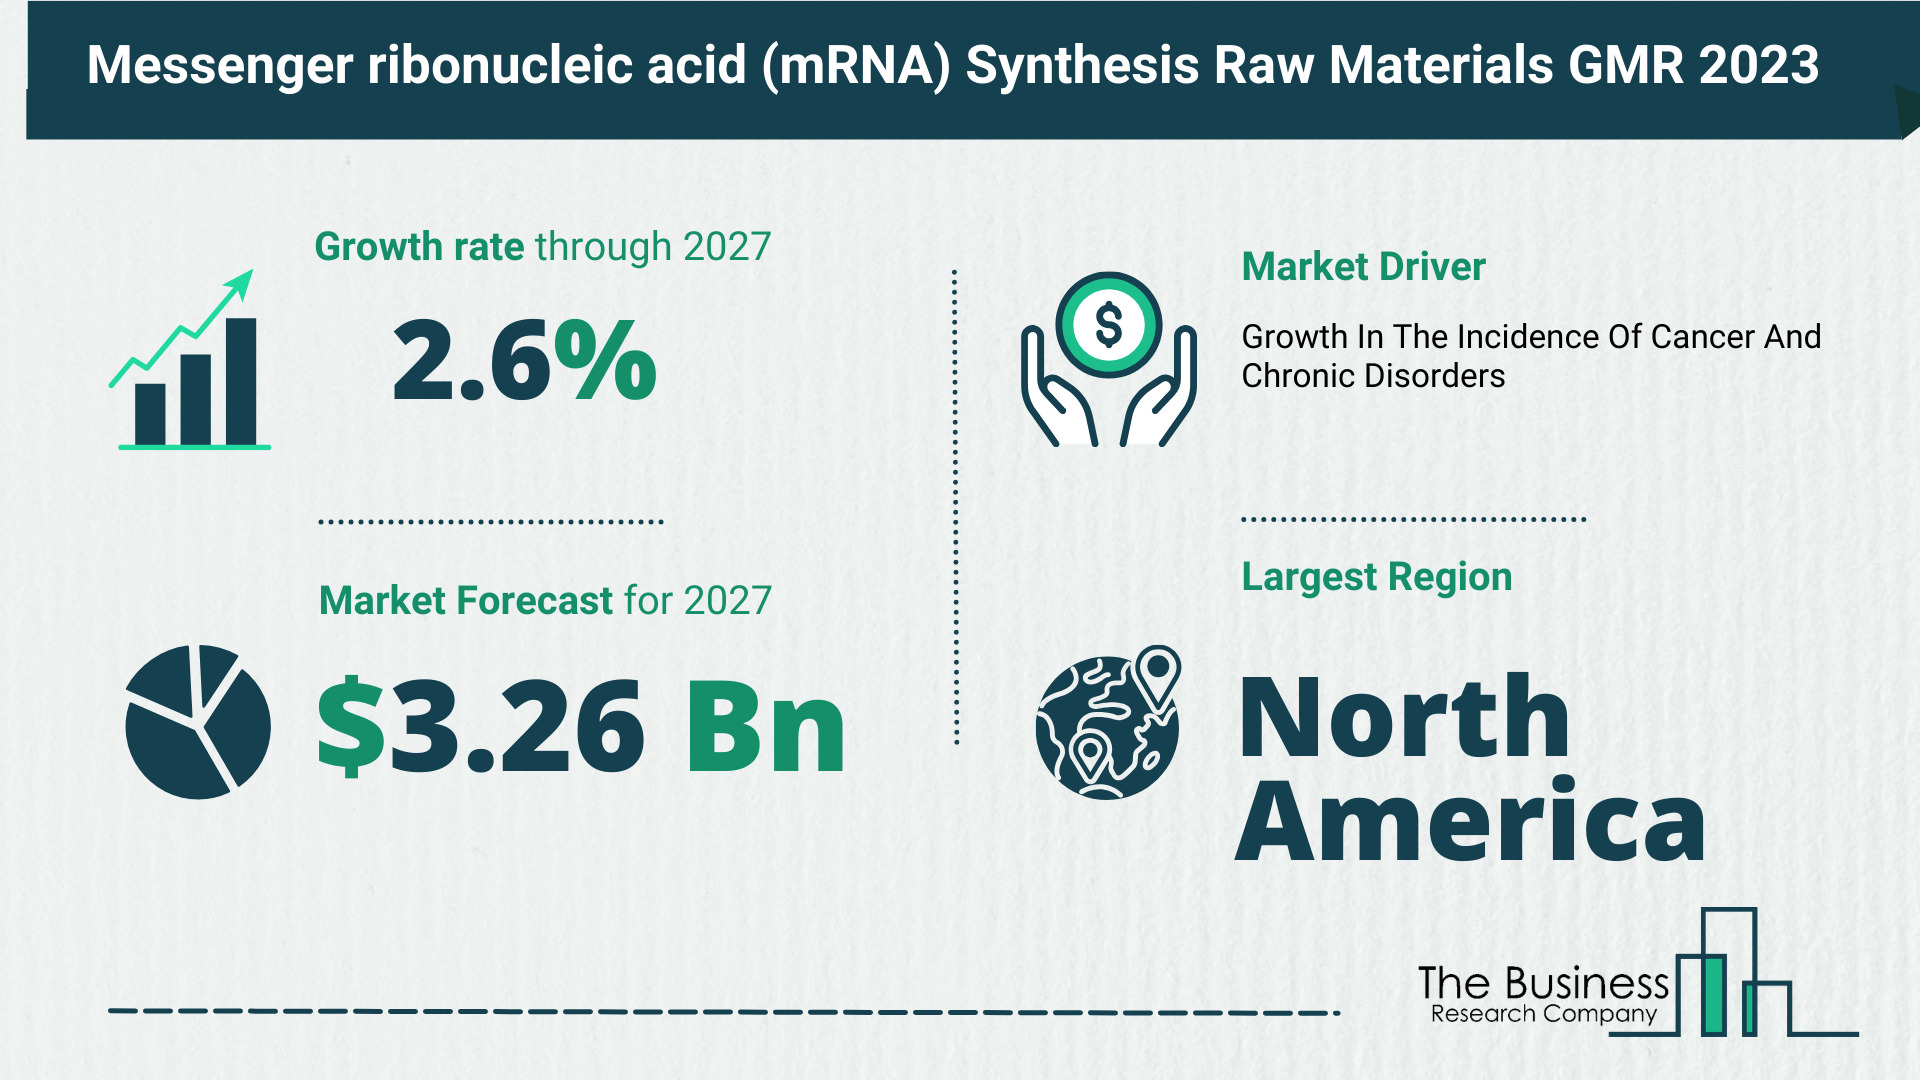 Global Messenger ribonucleic acid (mRNA) Synthesis Raw Materials Market